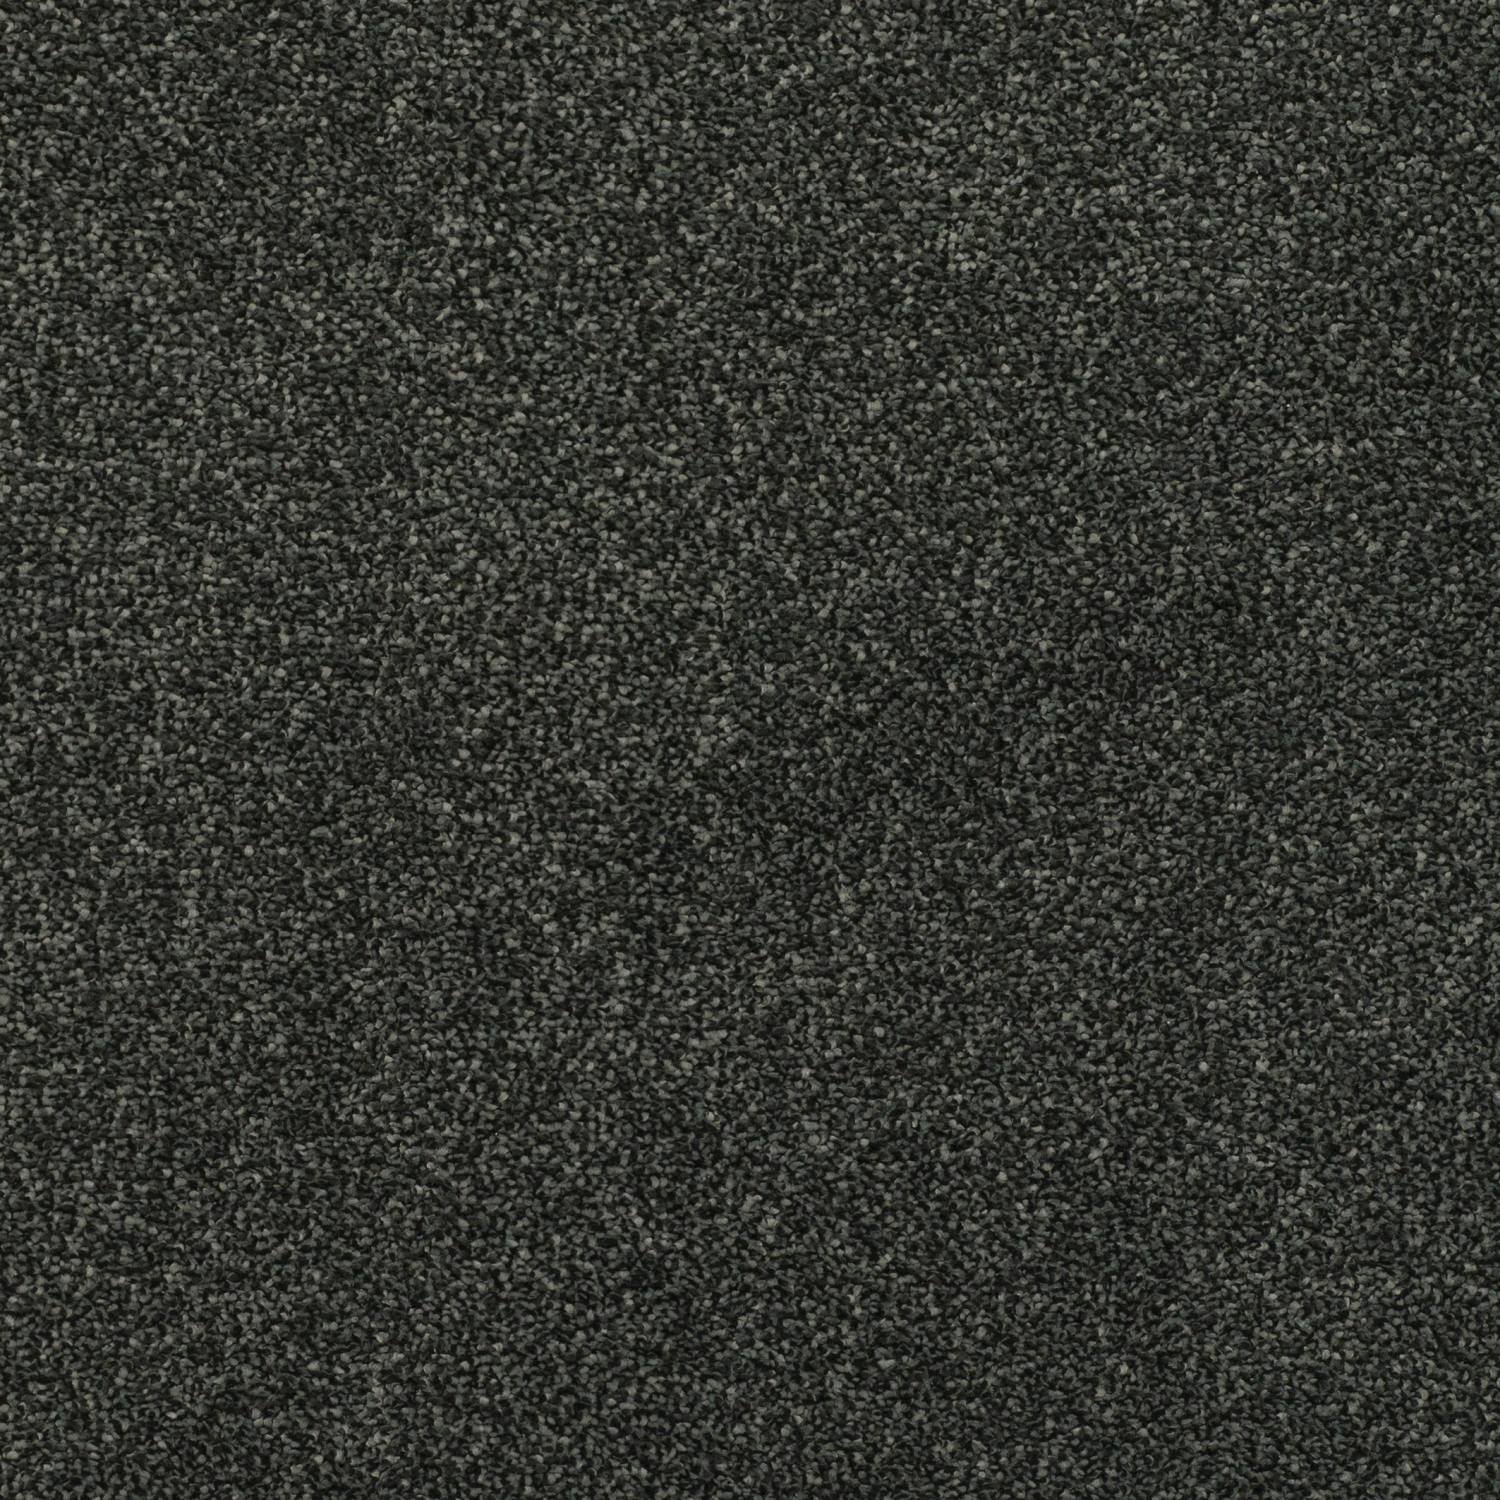 Obsession Twist Luxury Deep Pile Carpet - 954 Forged Iron